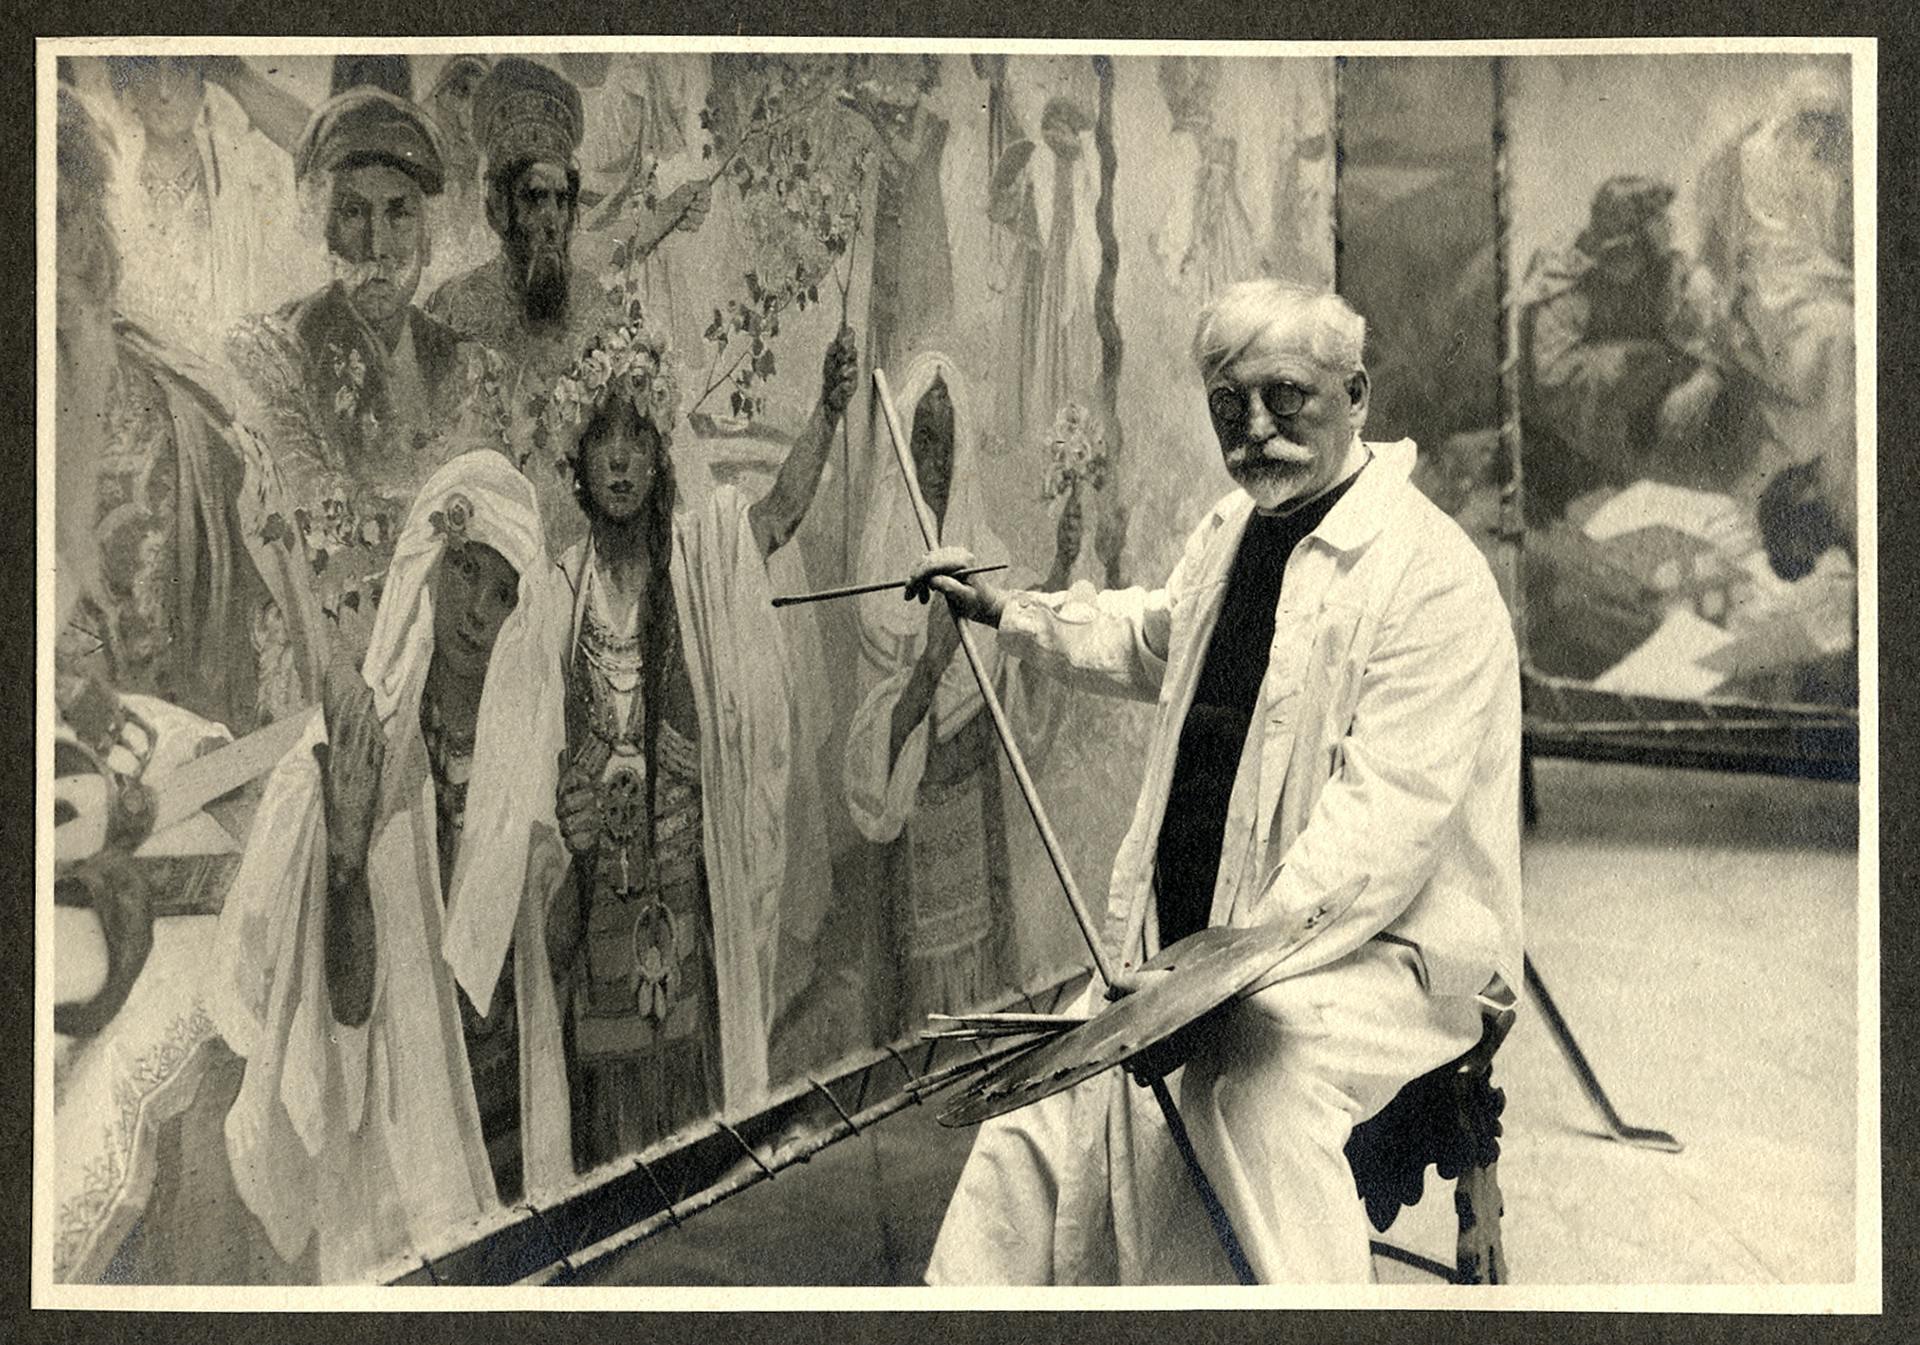 Alphonse Mucha: The Spirit of Art Nouveau